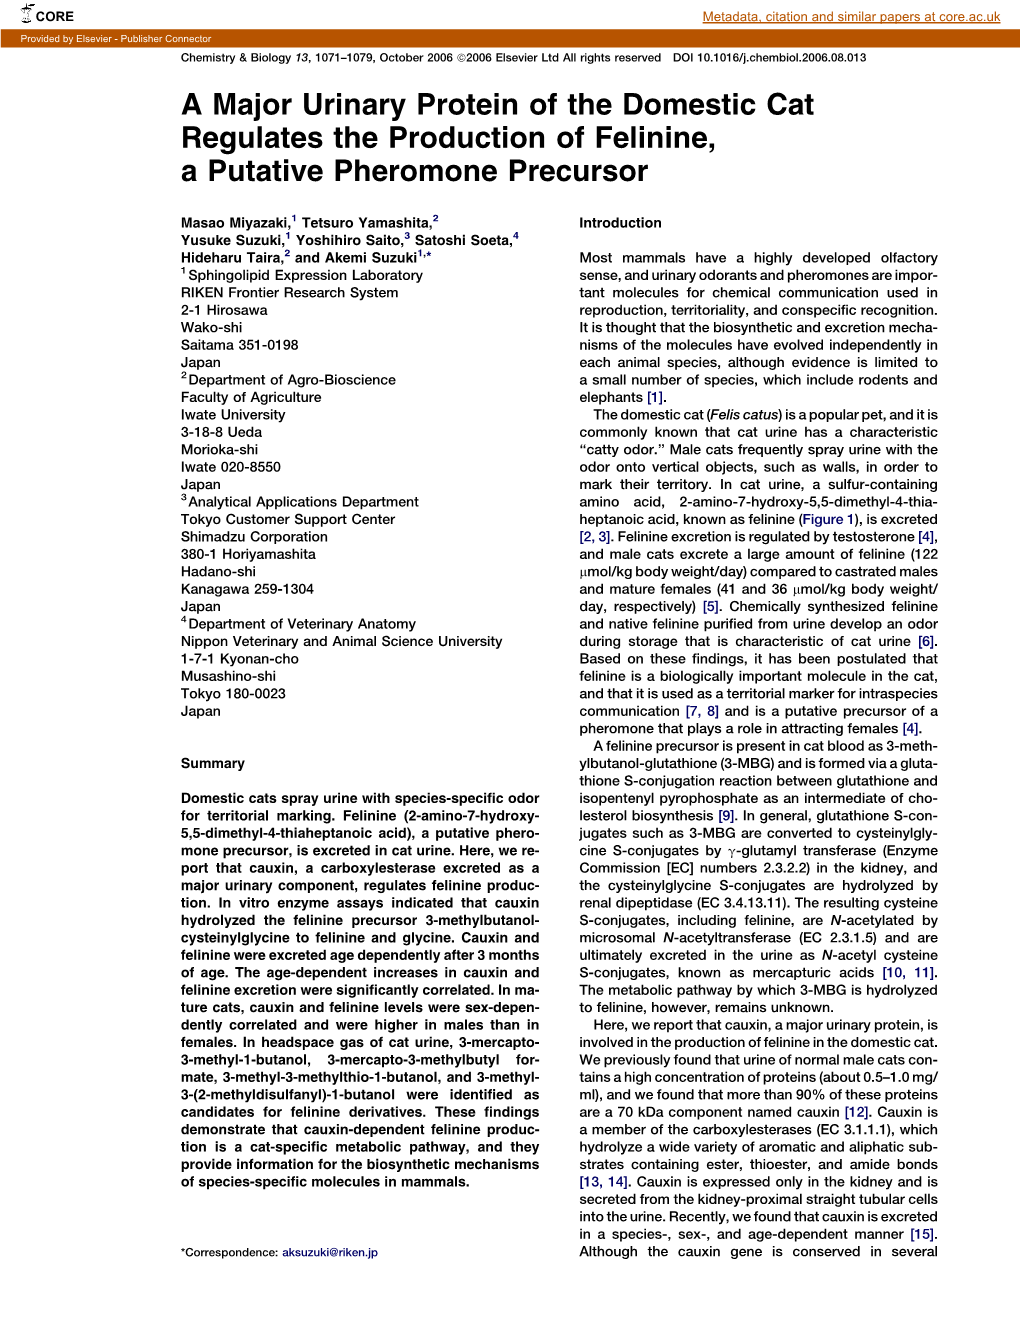 A Major Urinary Protein of the Domestic Cat Regulates the Production of Felinine, a Putative Pheromone Precursor